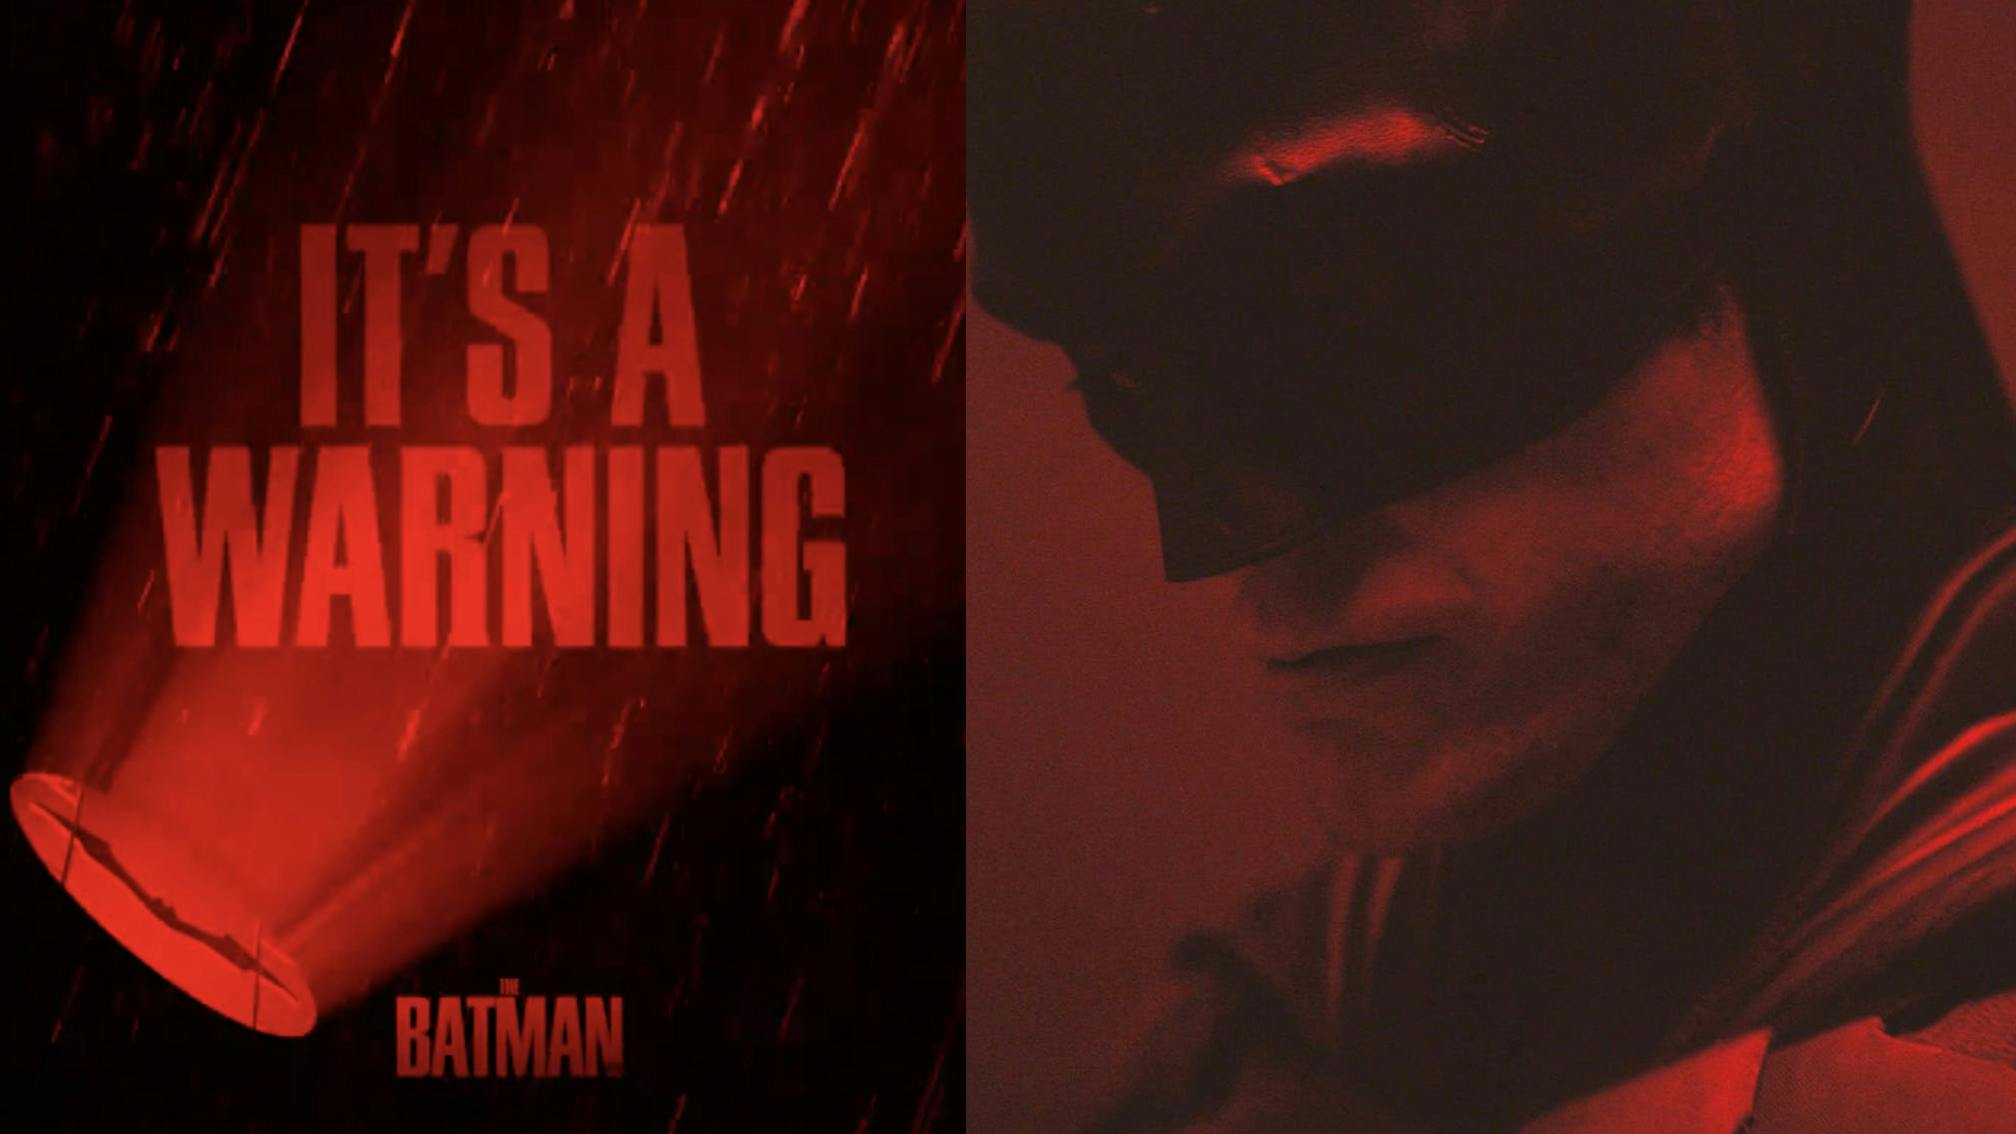 Hear Robert Pattinson as Batman in awesome short new teaser